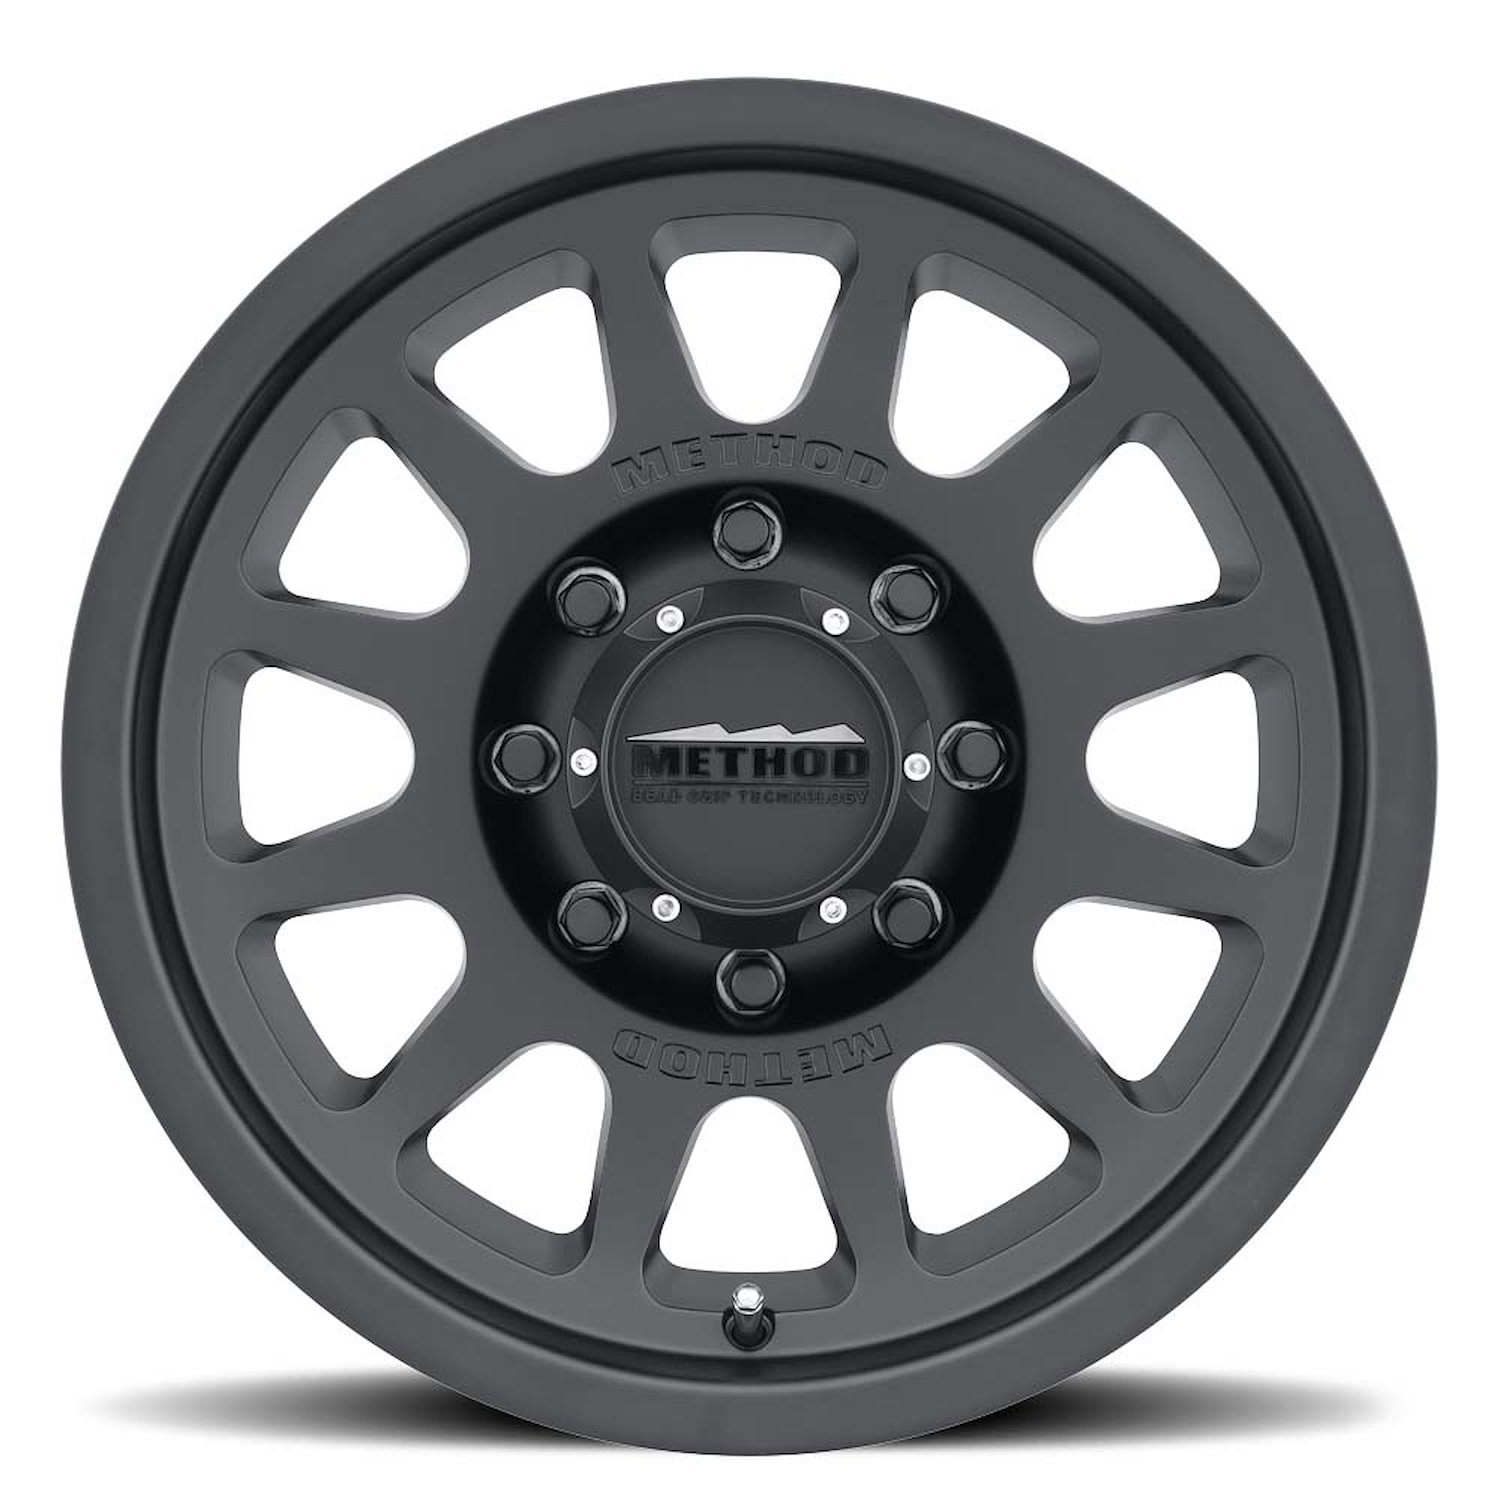 MR70378580500 TRAIL MR703 Bead Grip Wheel [Size: 17" x 8.5"] Matte Black